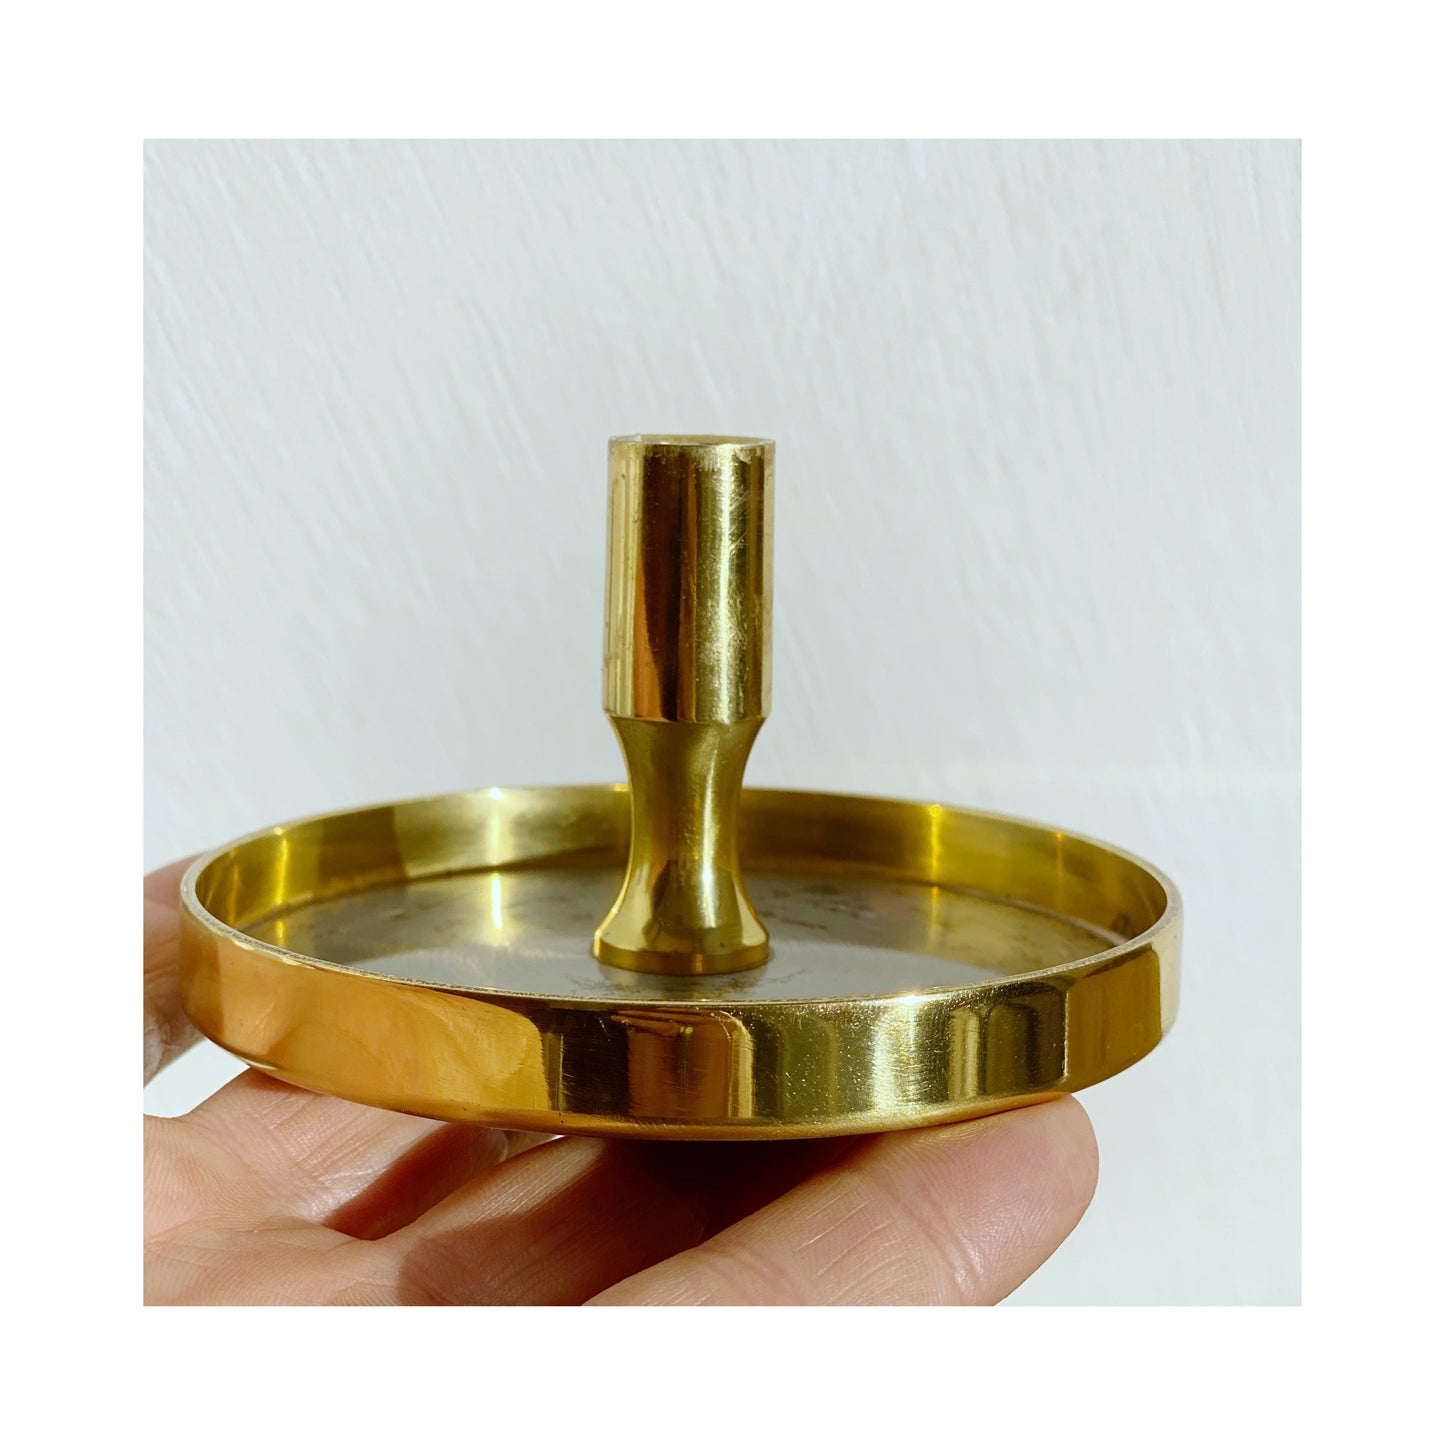 Dansk Design Brass and Steel Candleholder 1960s